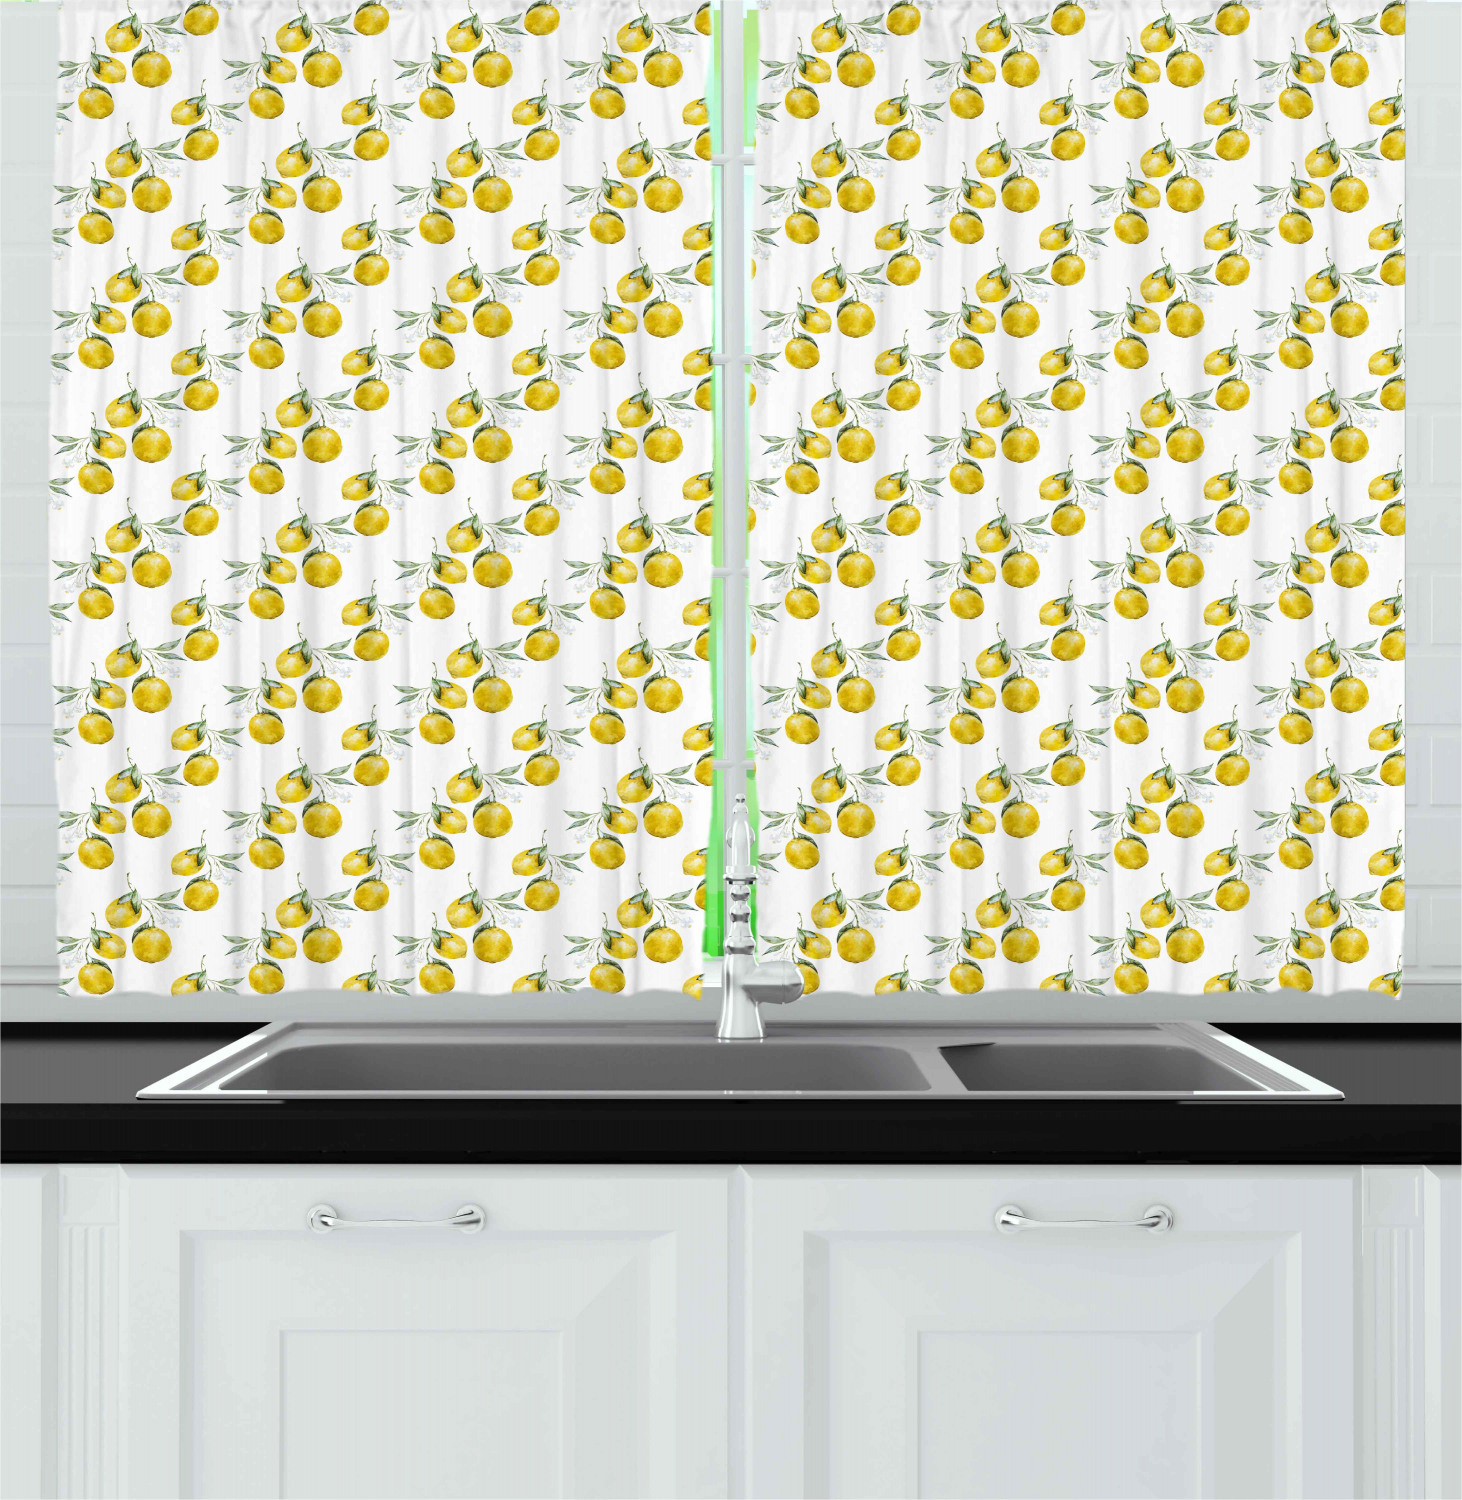 Lemon Kitchen Curtains
 Summer Lemon Kitchen Curtains 2 Panel Set Window Drapes 55